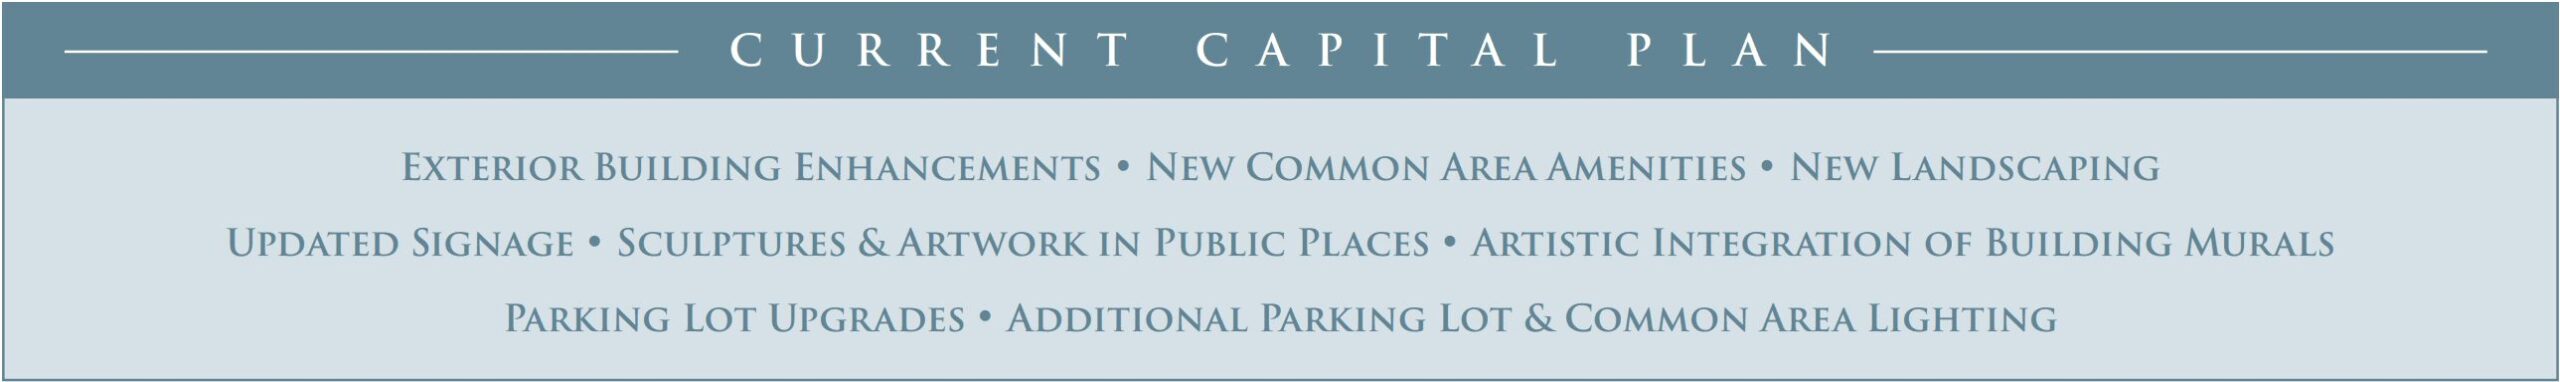 Current-Capital-Plan-new